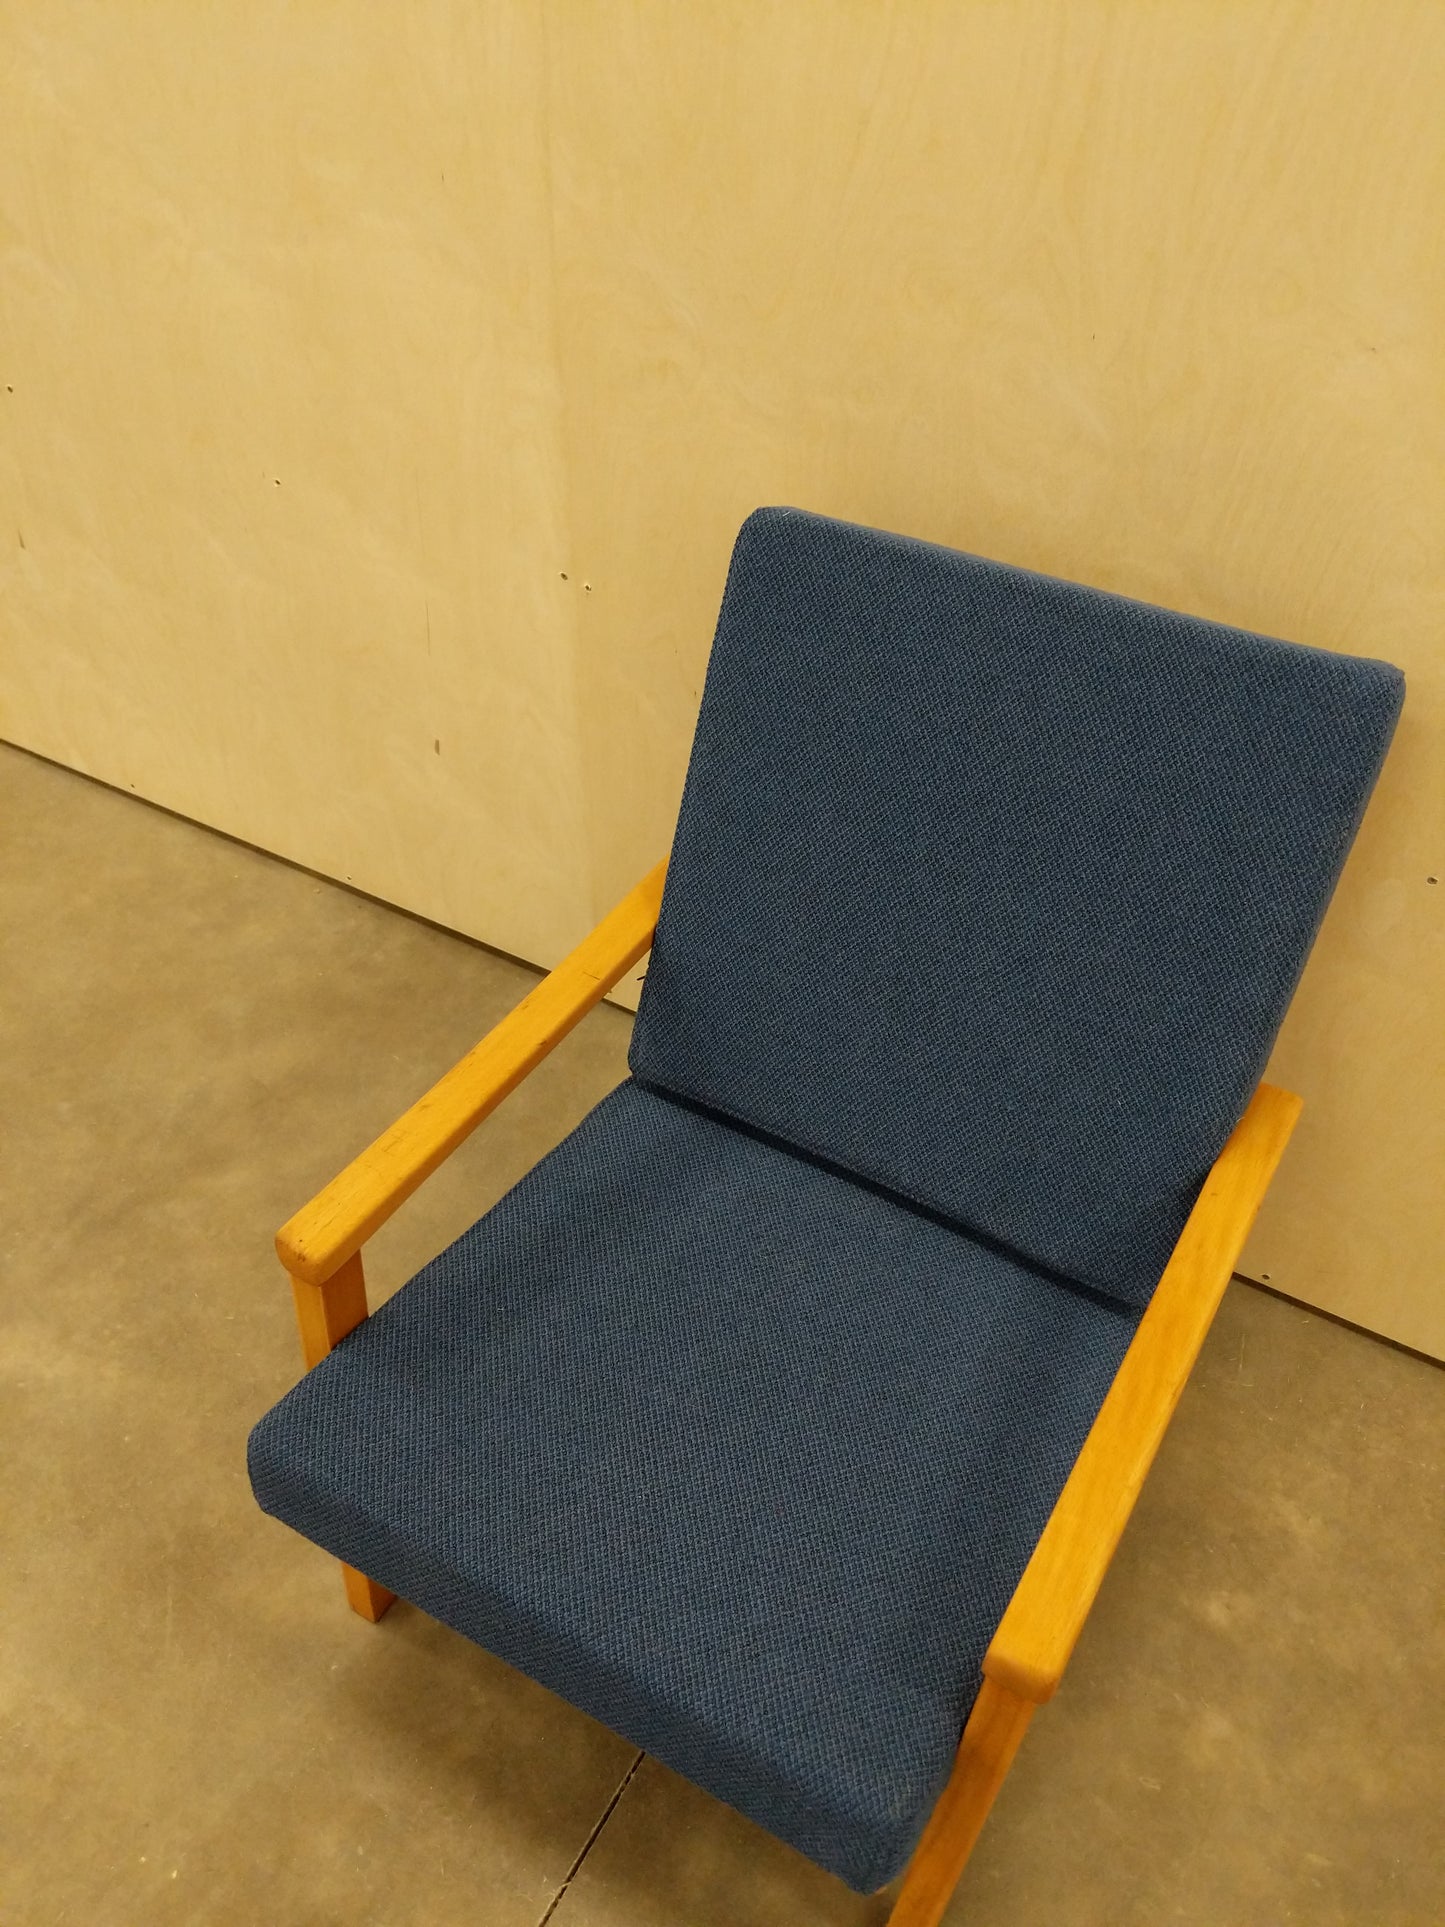 Vintage Czech Lounge Chair